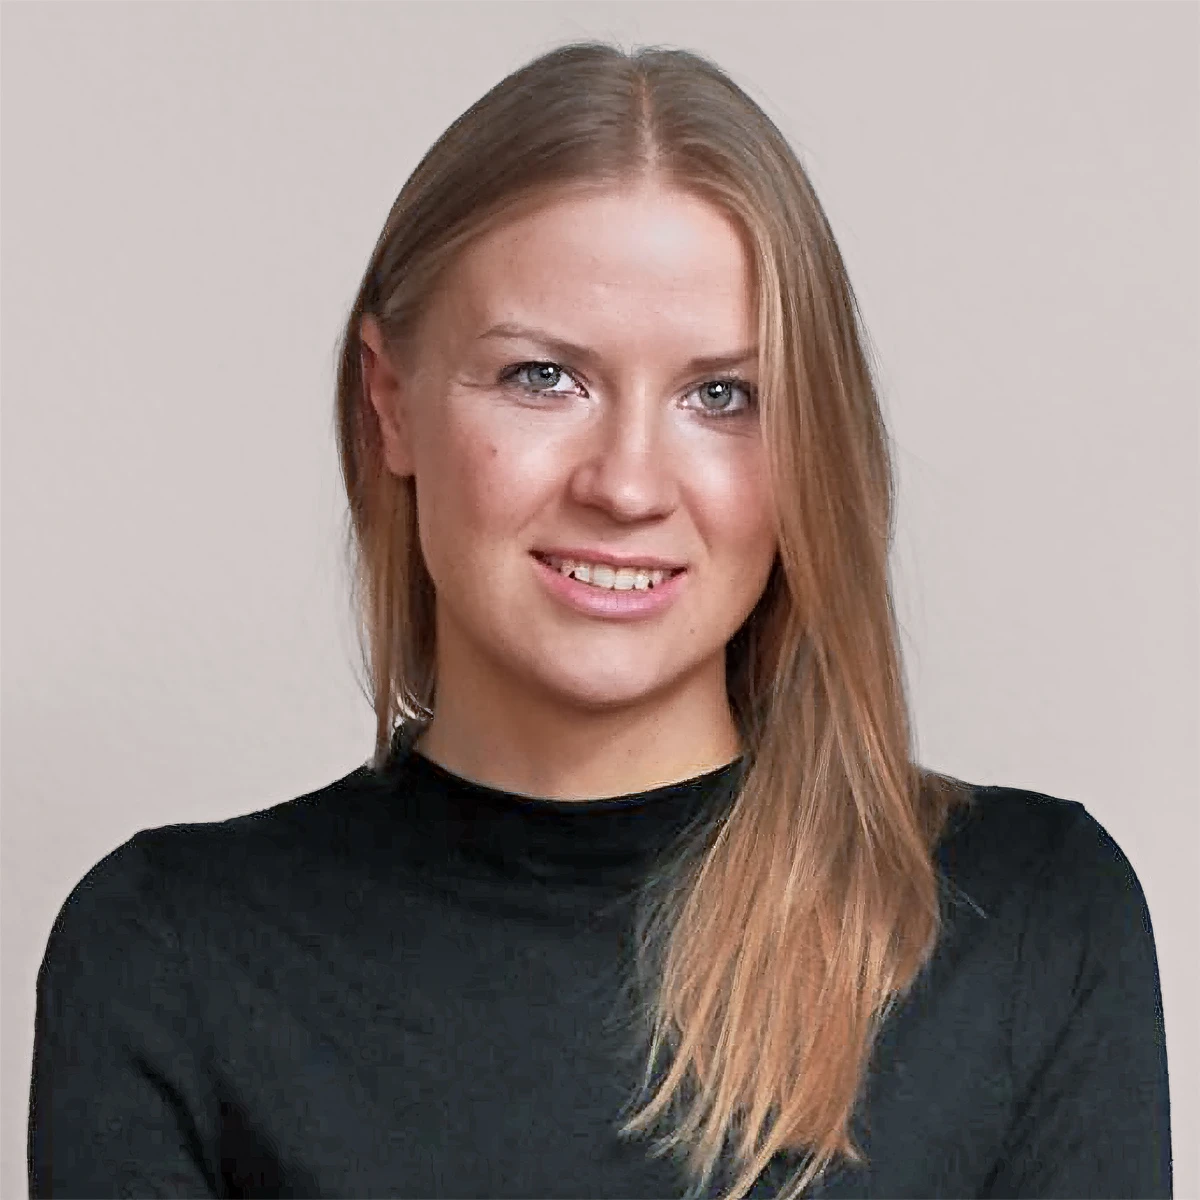 Carolina Engel